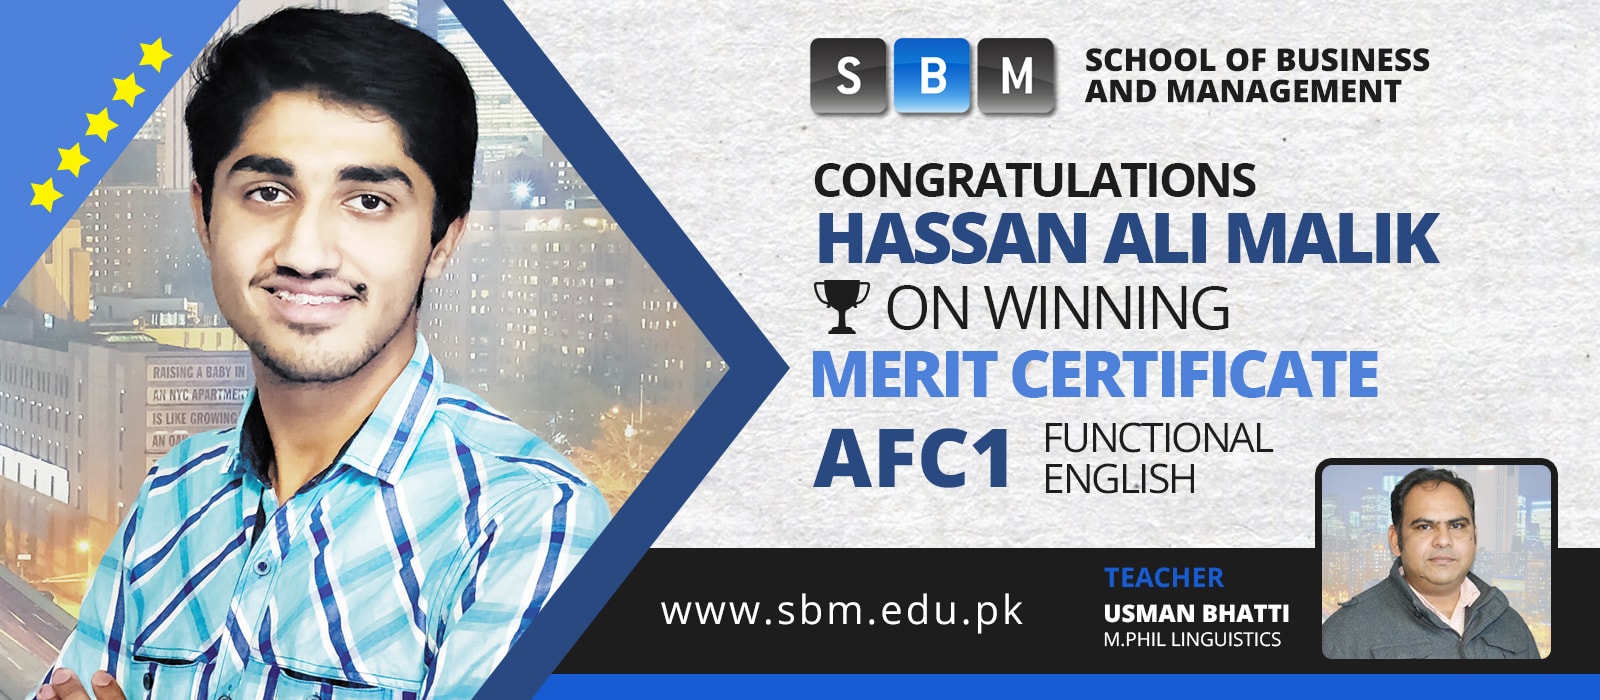 SBM's Student, Hassan Ali Malik, Wins Merit Certificate